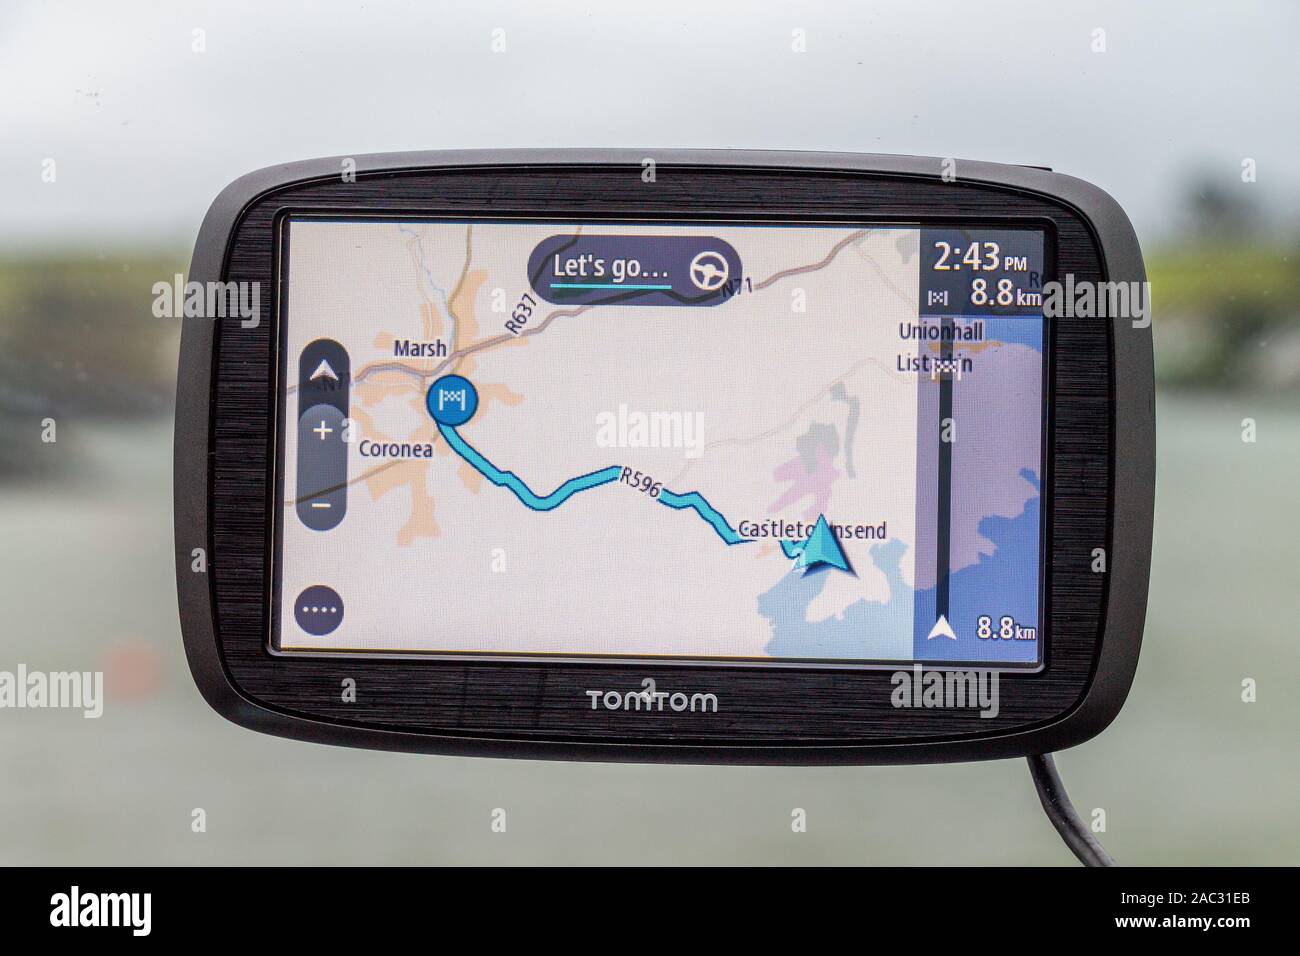 Satellite navigation system display on car windscreen Stock Photo